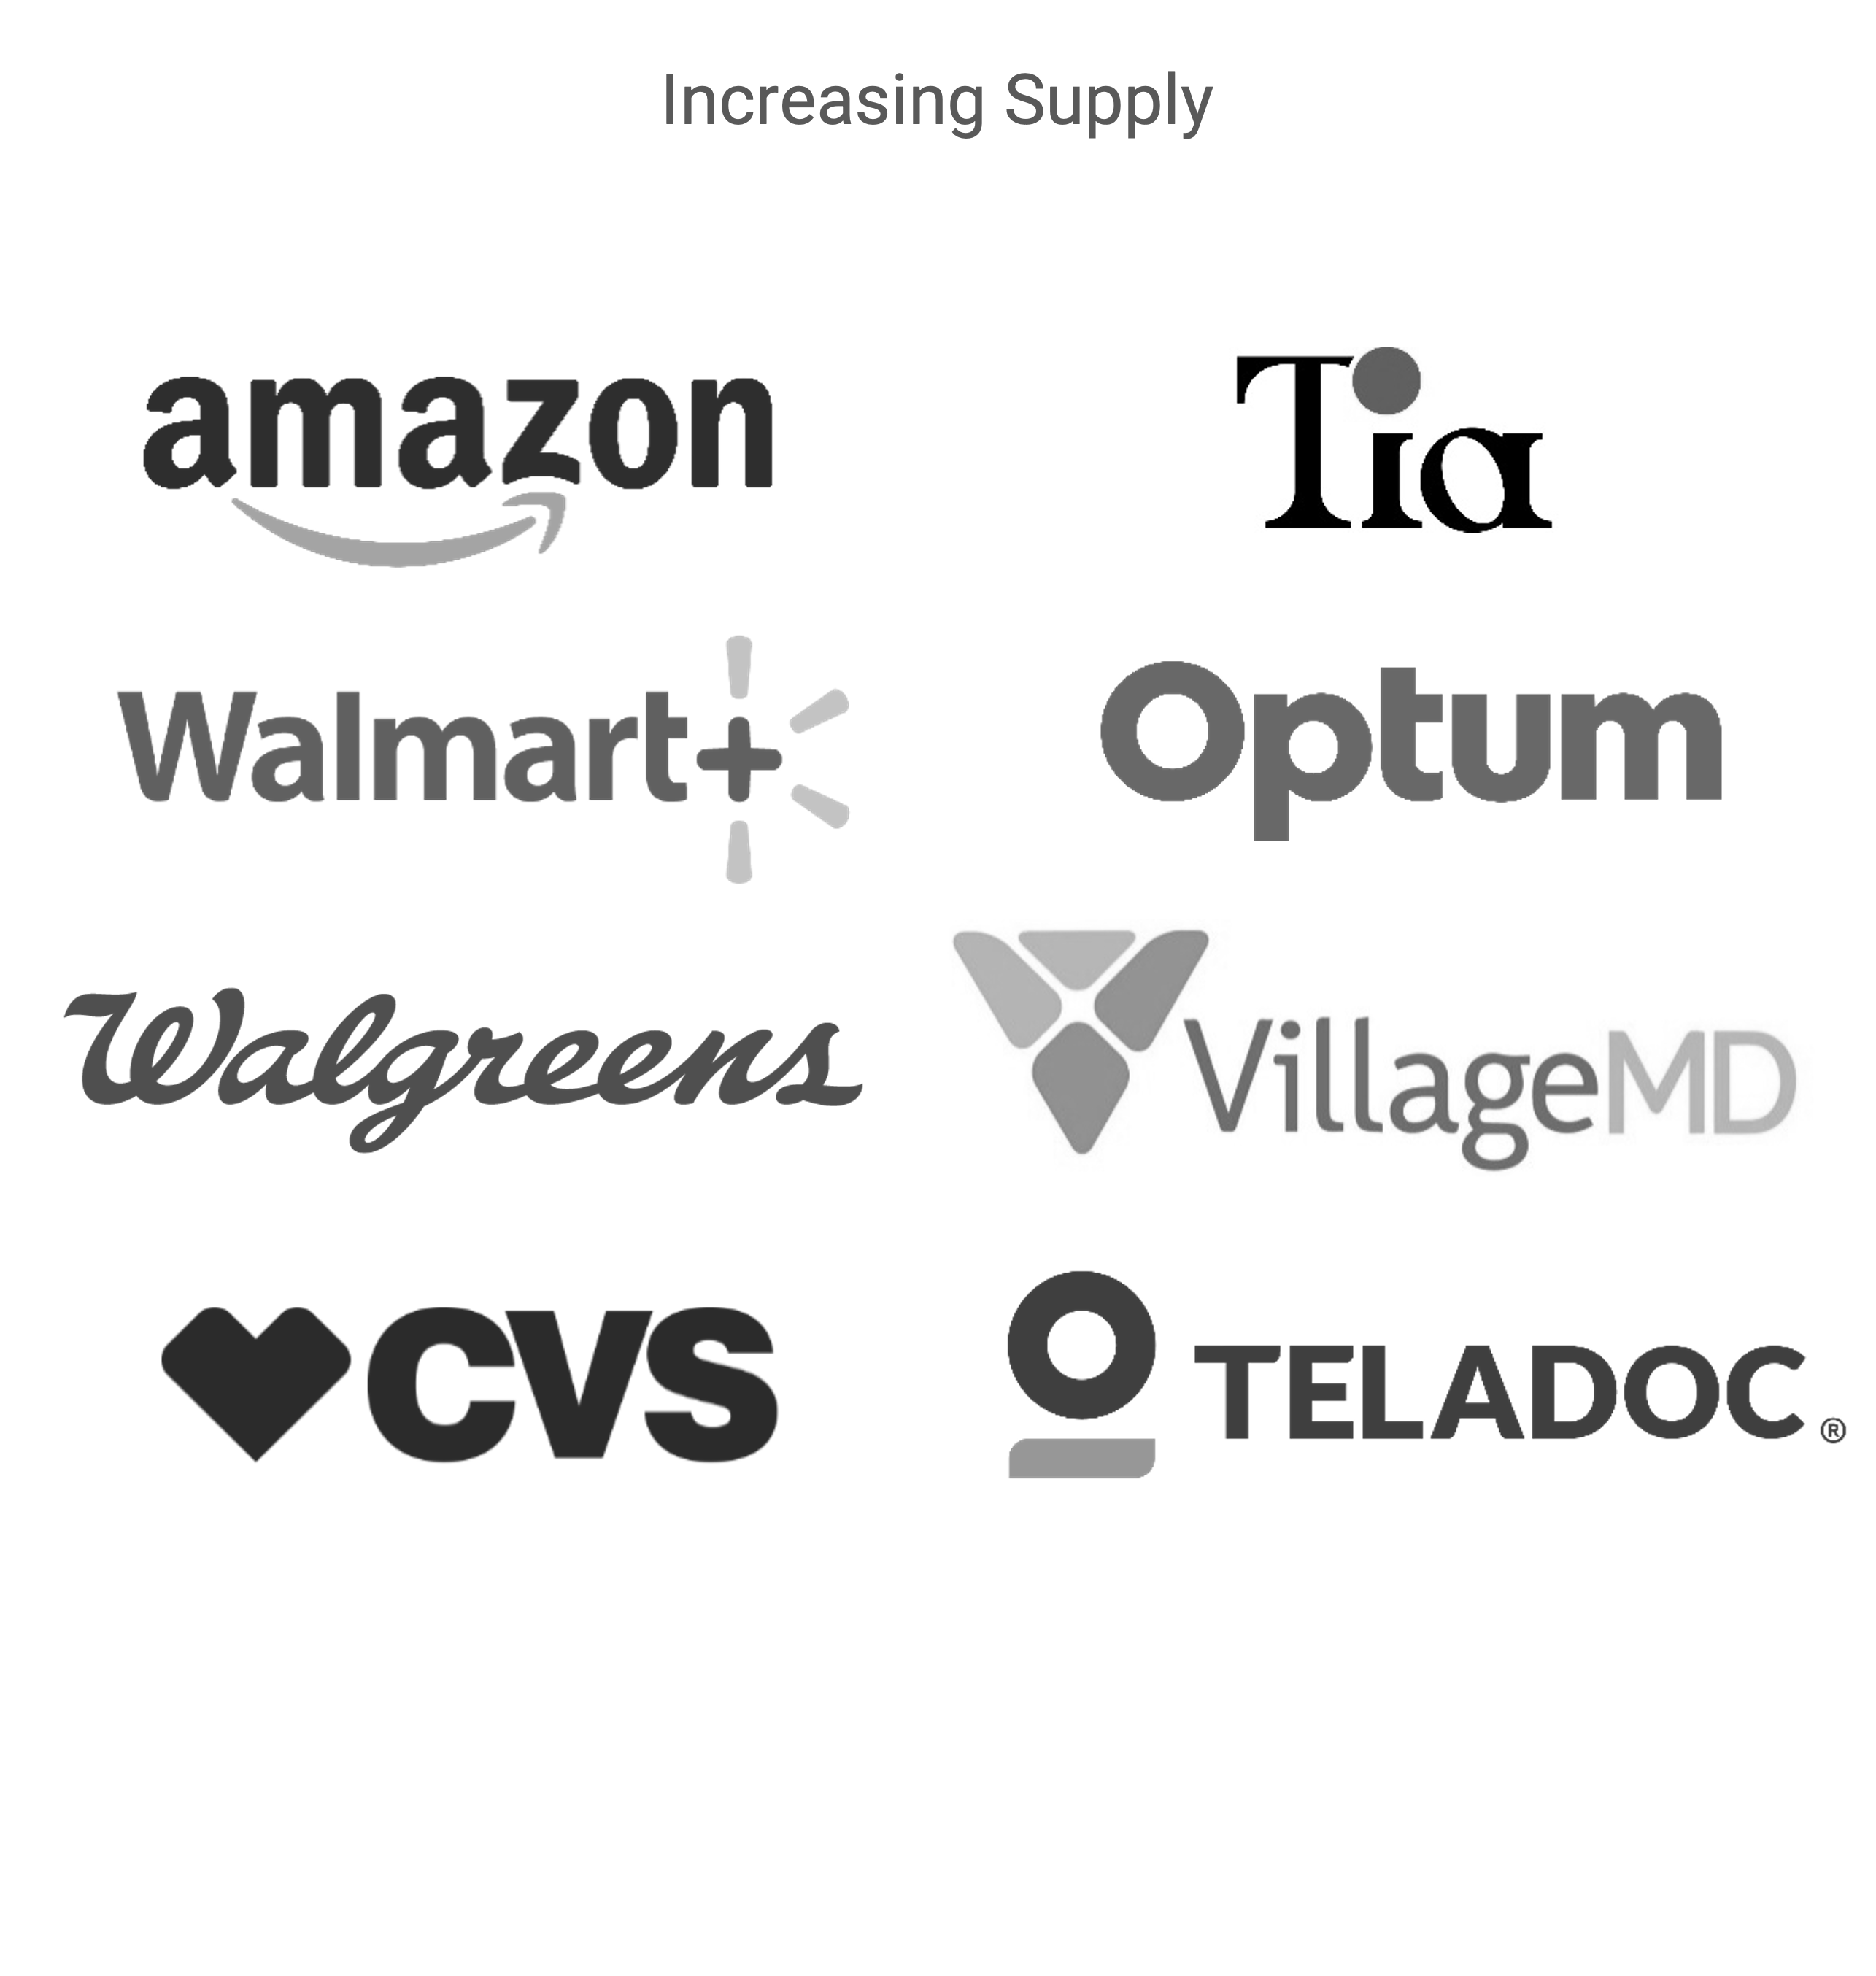 List of healthcare new entrants, including Amazon, Walmart, Walgreens, CVS, Tia, Optum, VillageMD and Teladoc